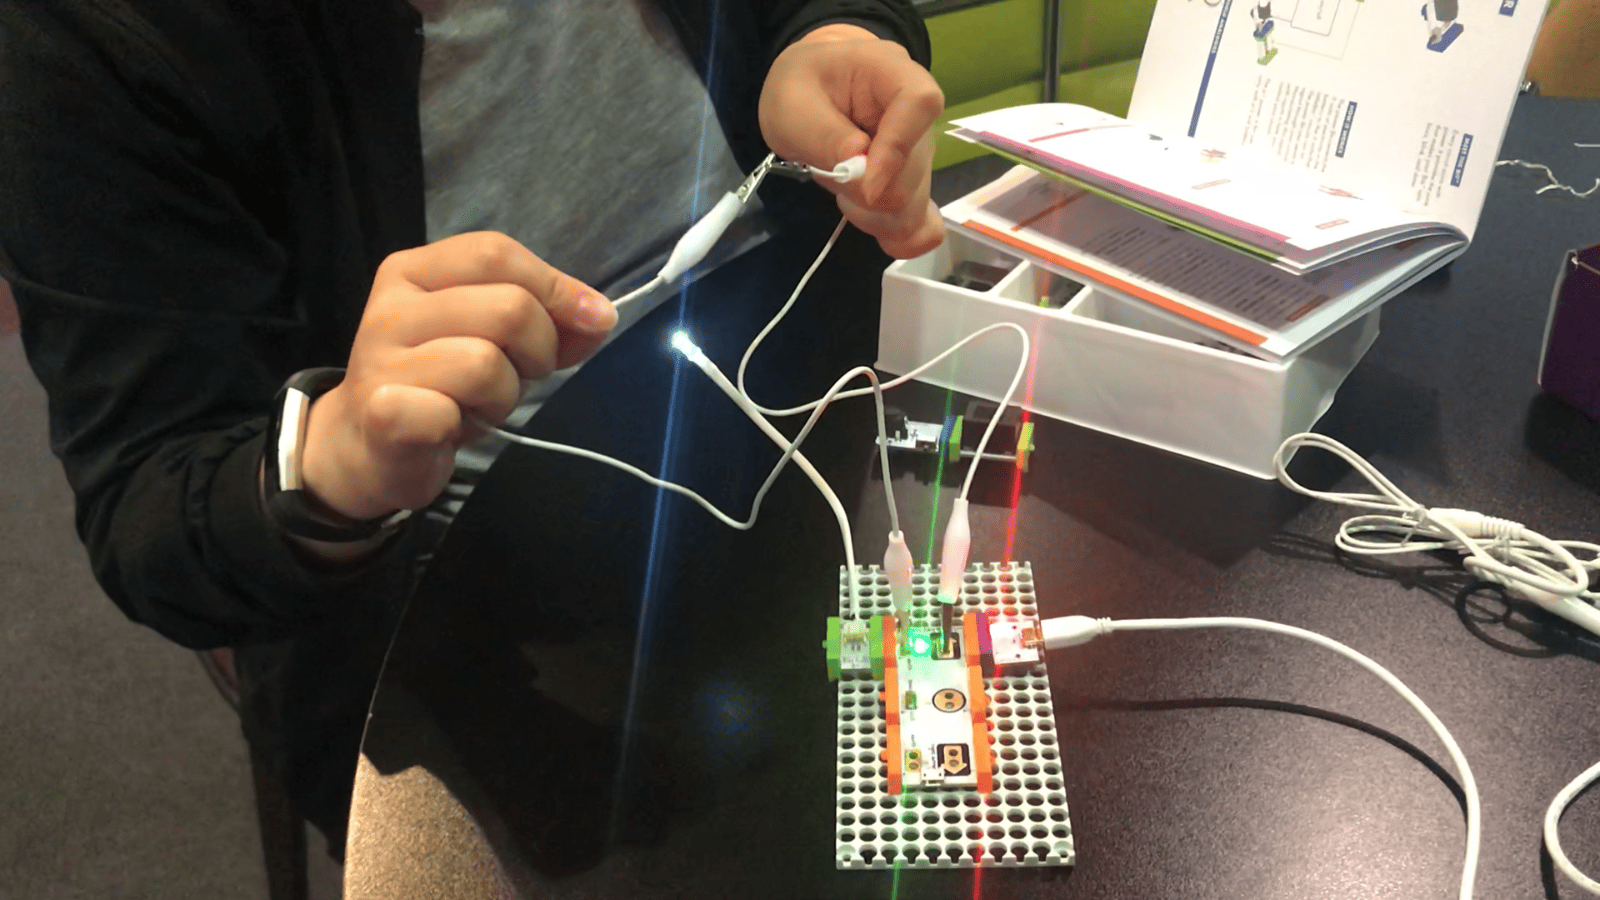 My demo on a light switch using LittleBits' tutorial